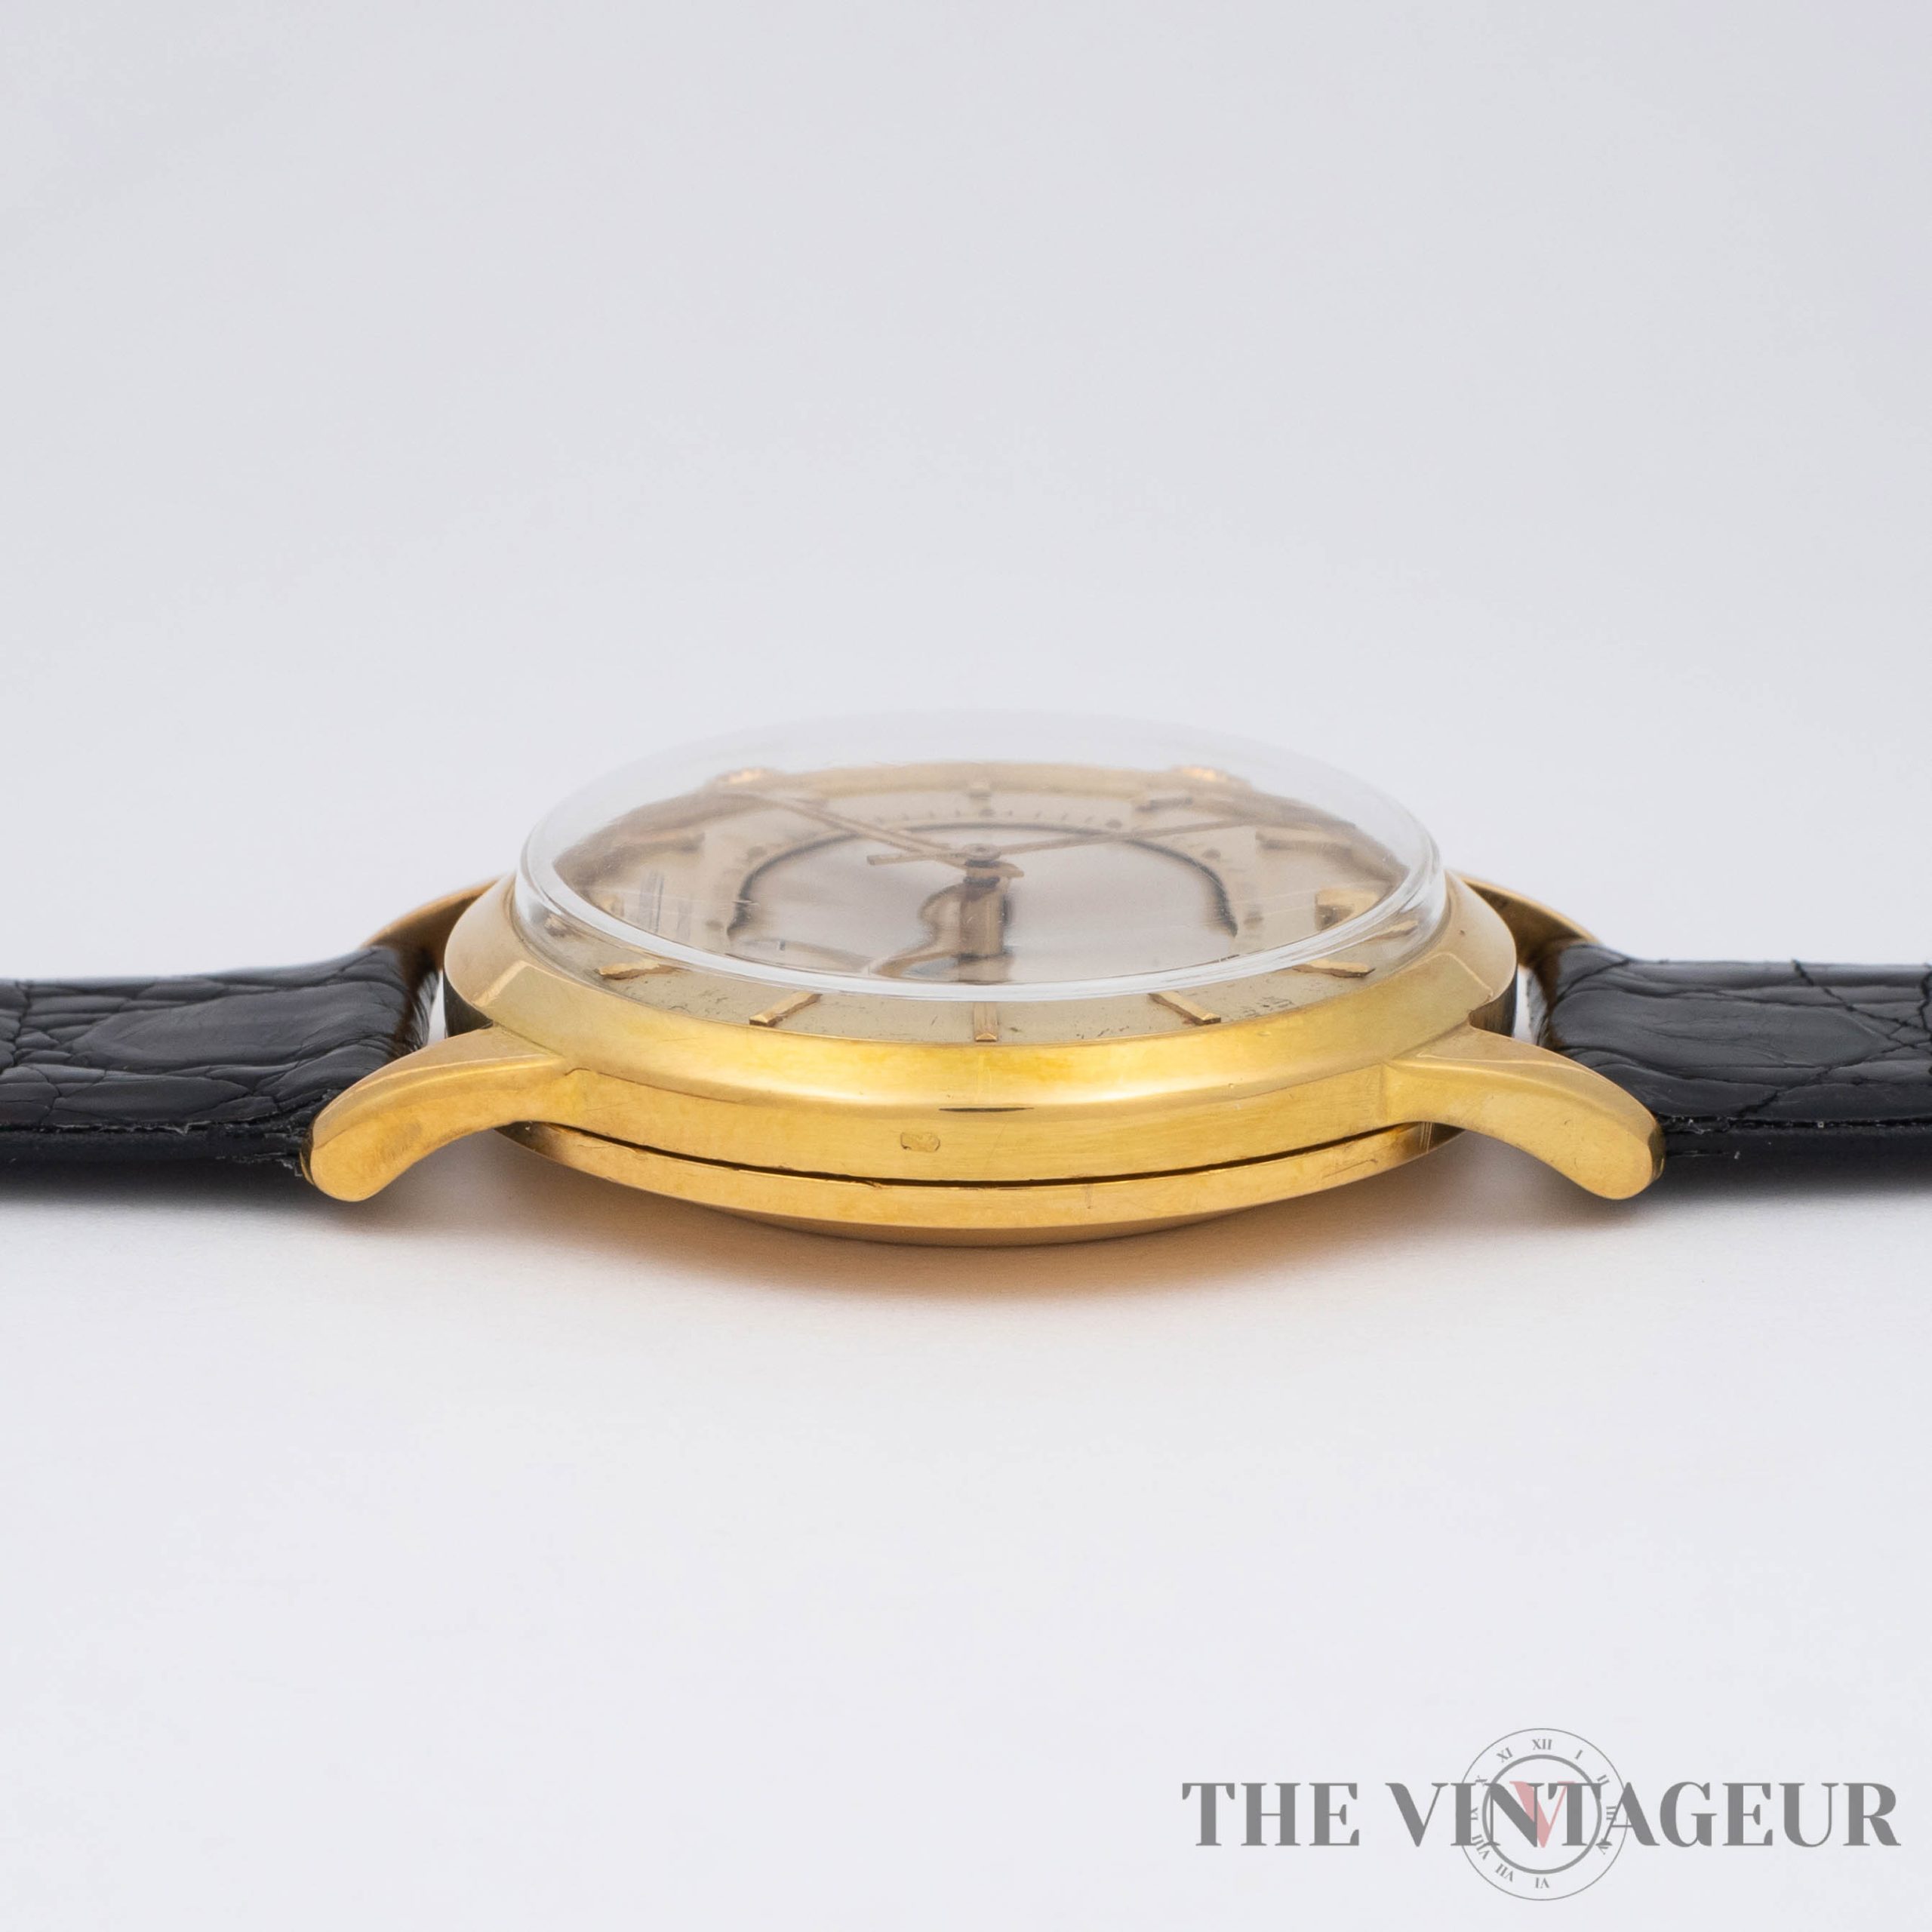 Jaeger LeCoultre - Memovox - Solid 18k Gold - Alarm Watch - The Vintageur